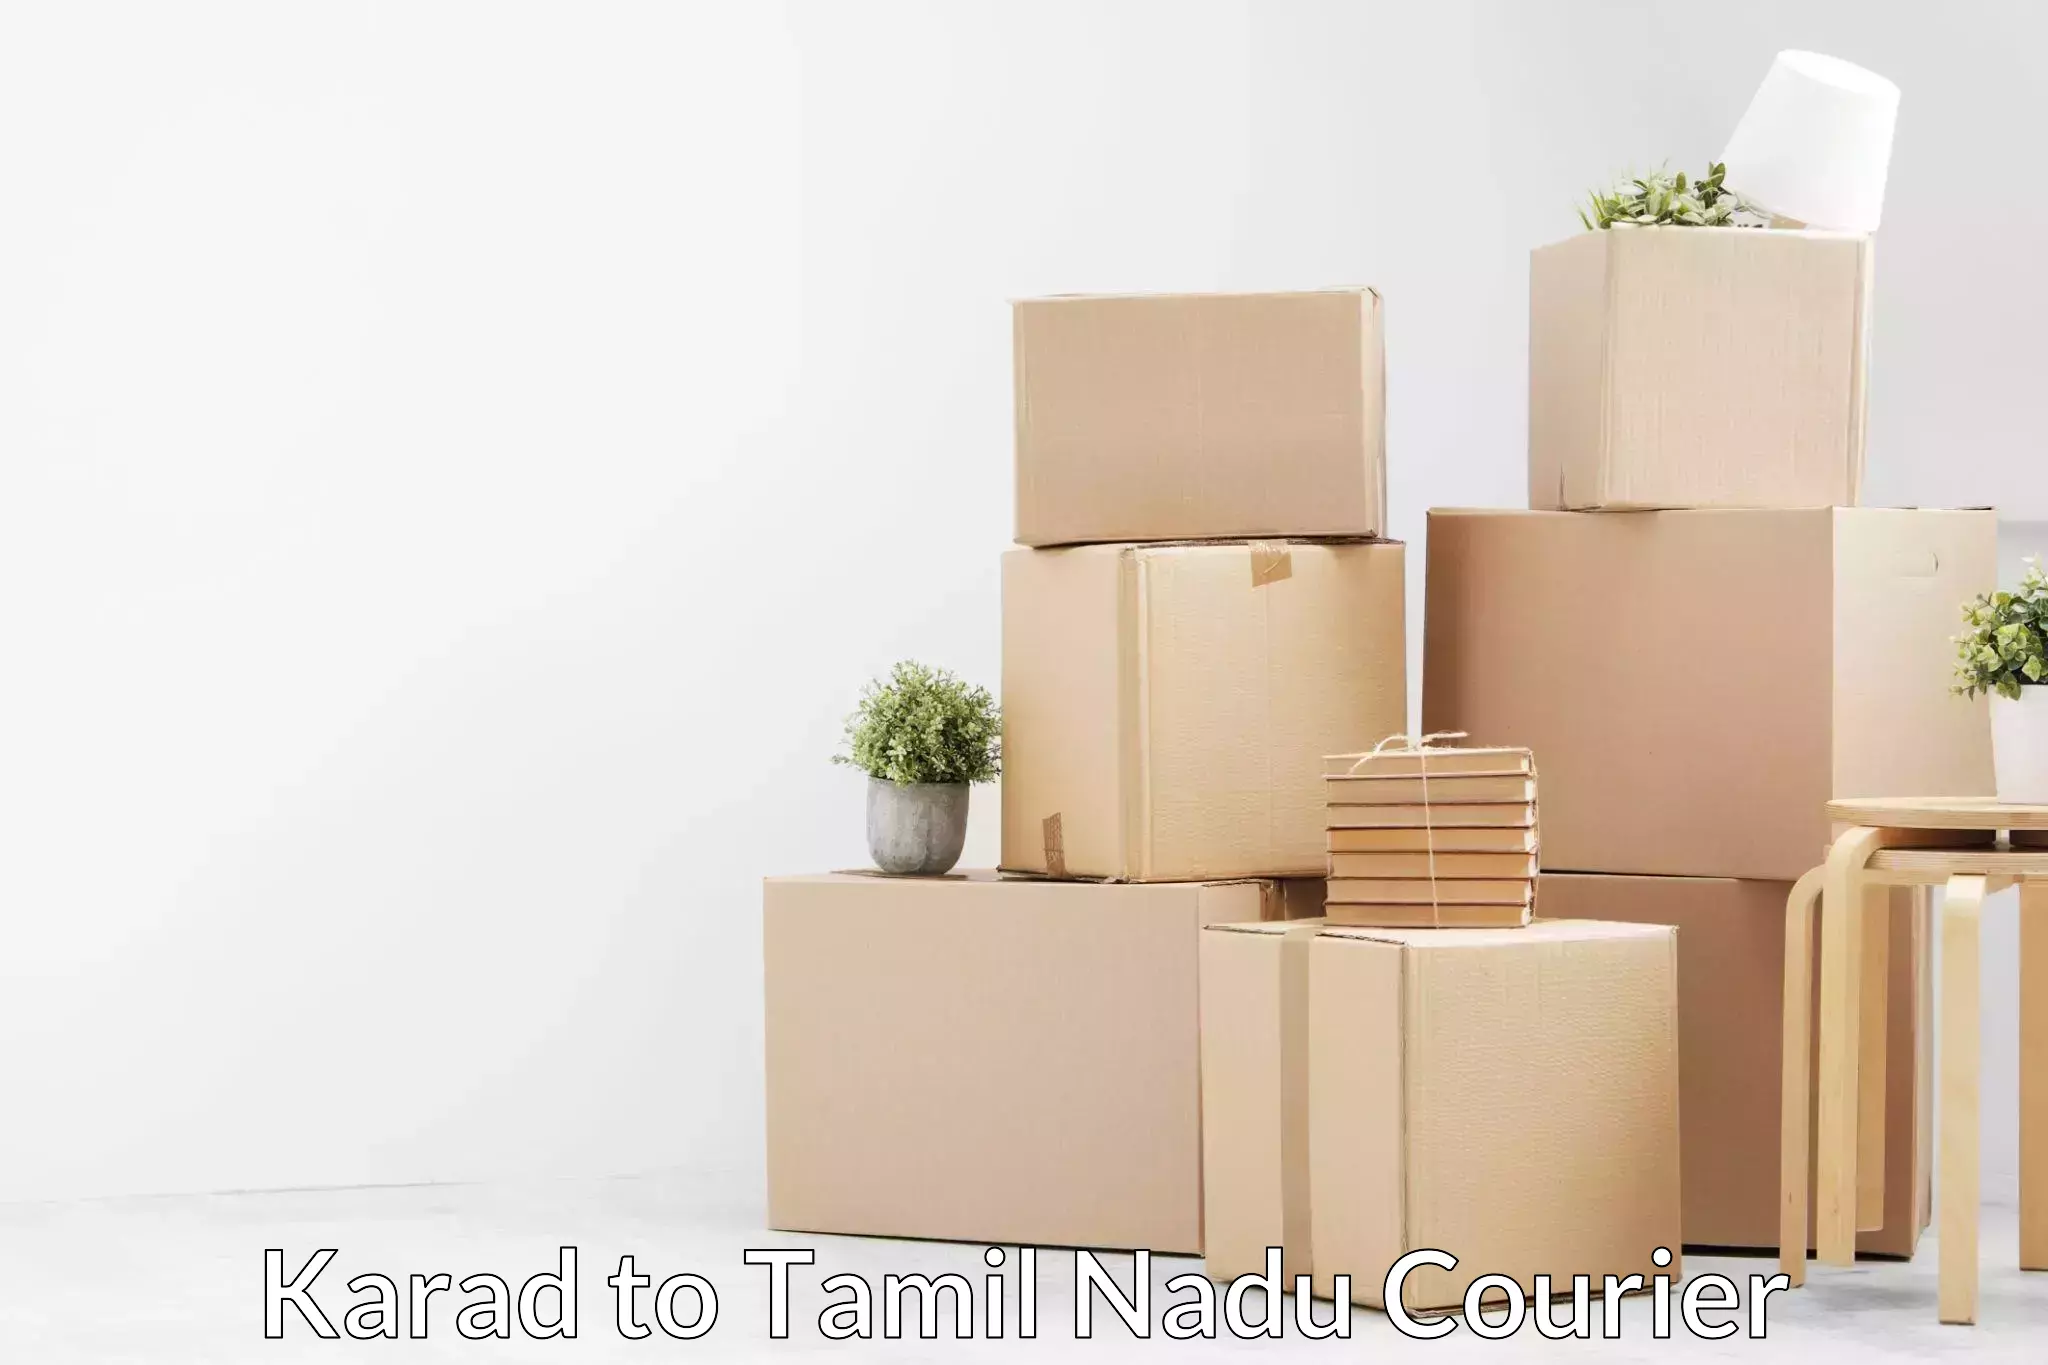 Efficient moving company Karad to Tamil Nadu